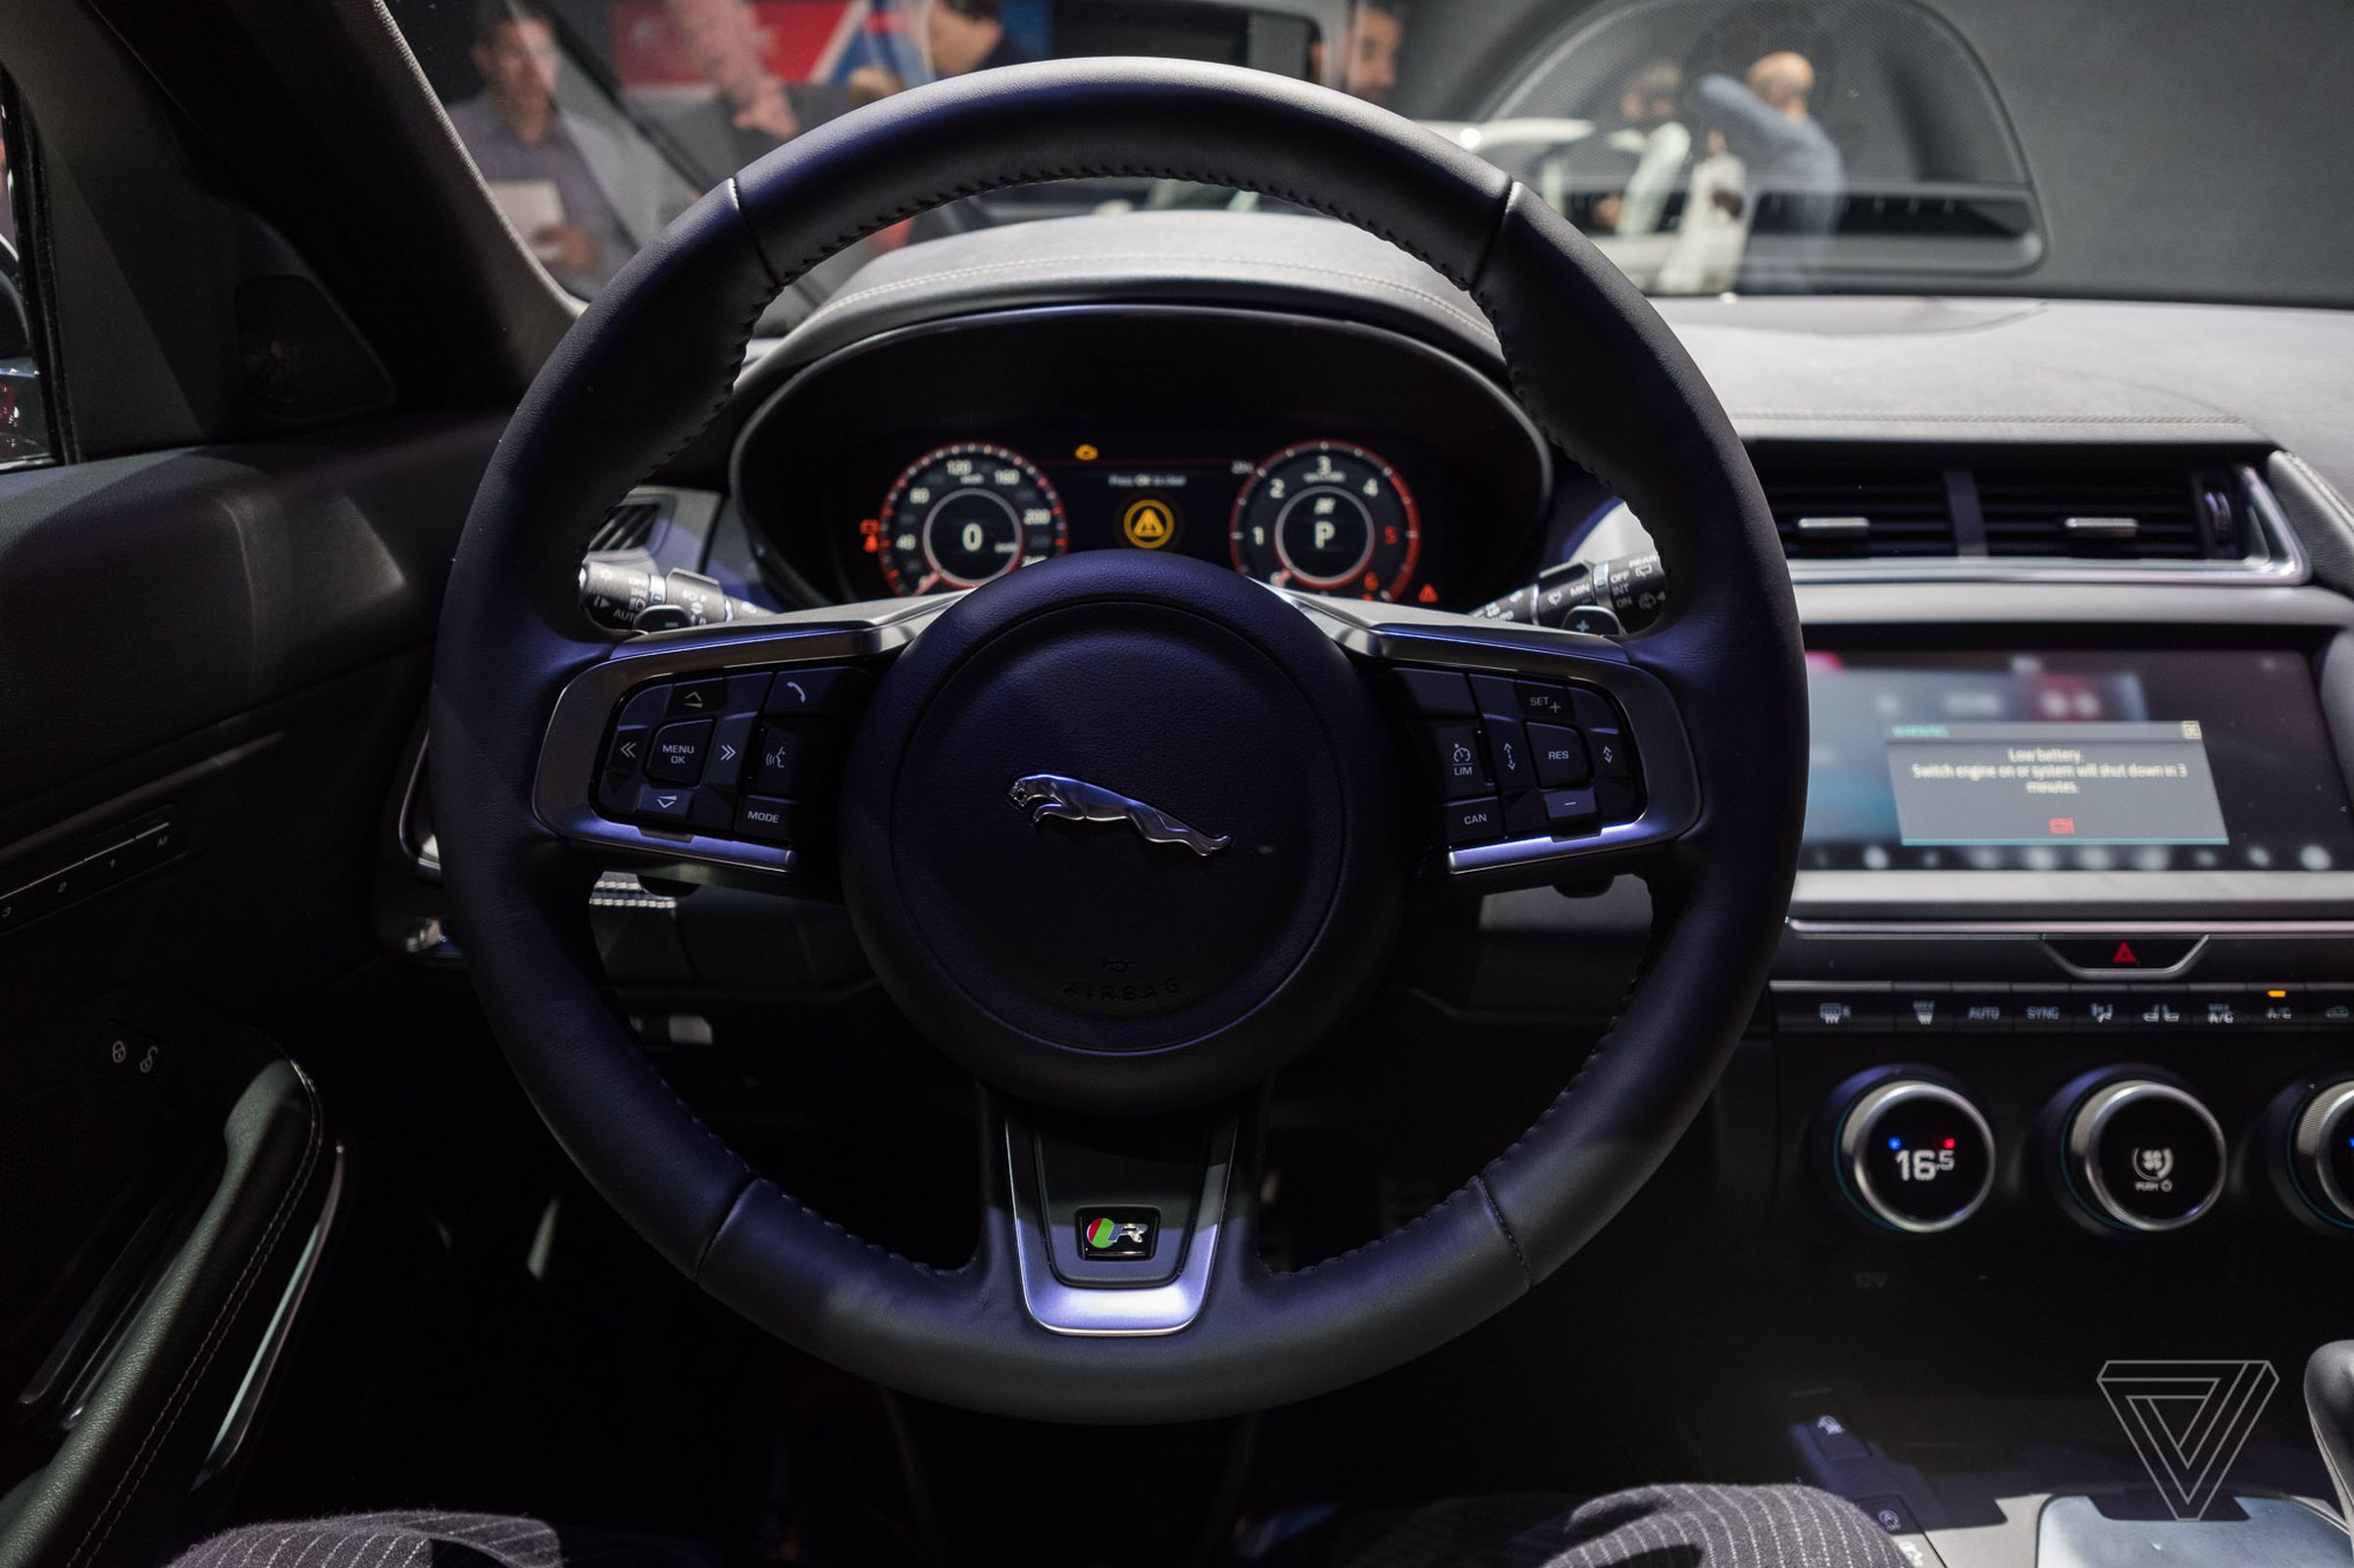 Jaguar E-Pace debut in London, July 2017